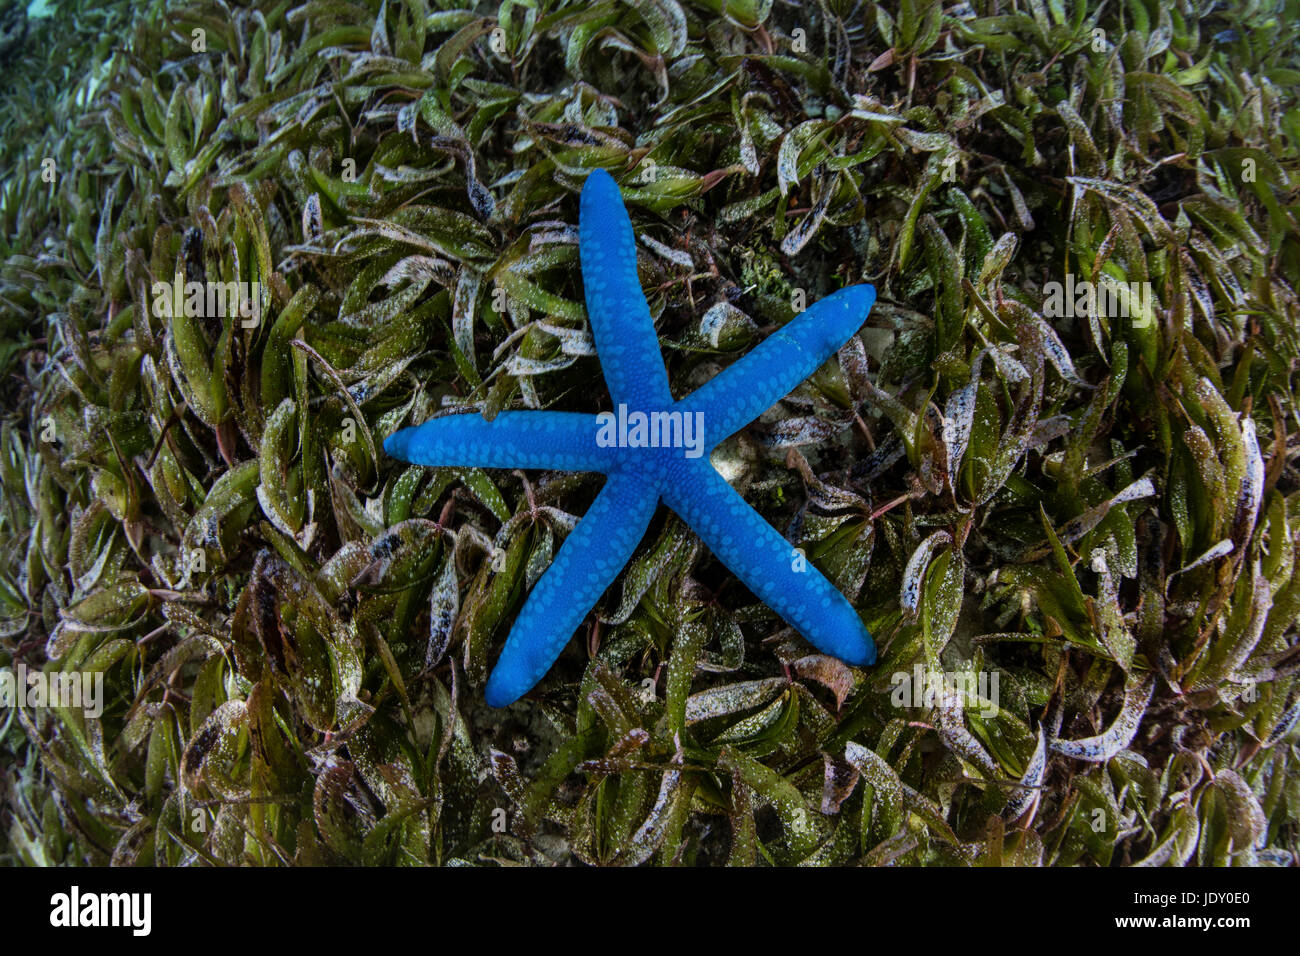 Blue Starfish in Seagras Bed, Linckia laevigata, Wakatobi, Celebes, Indonesia Stock Photo